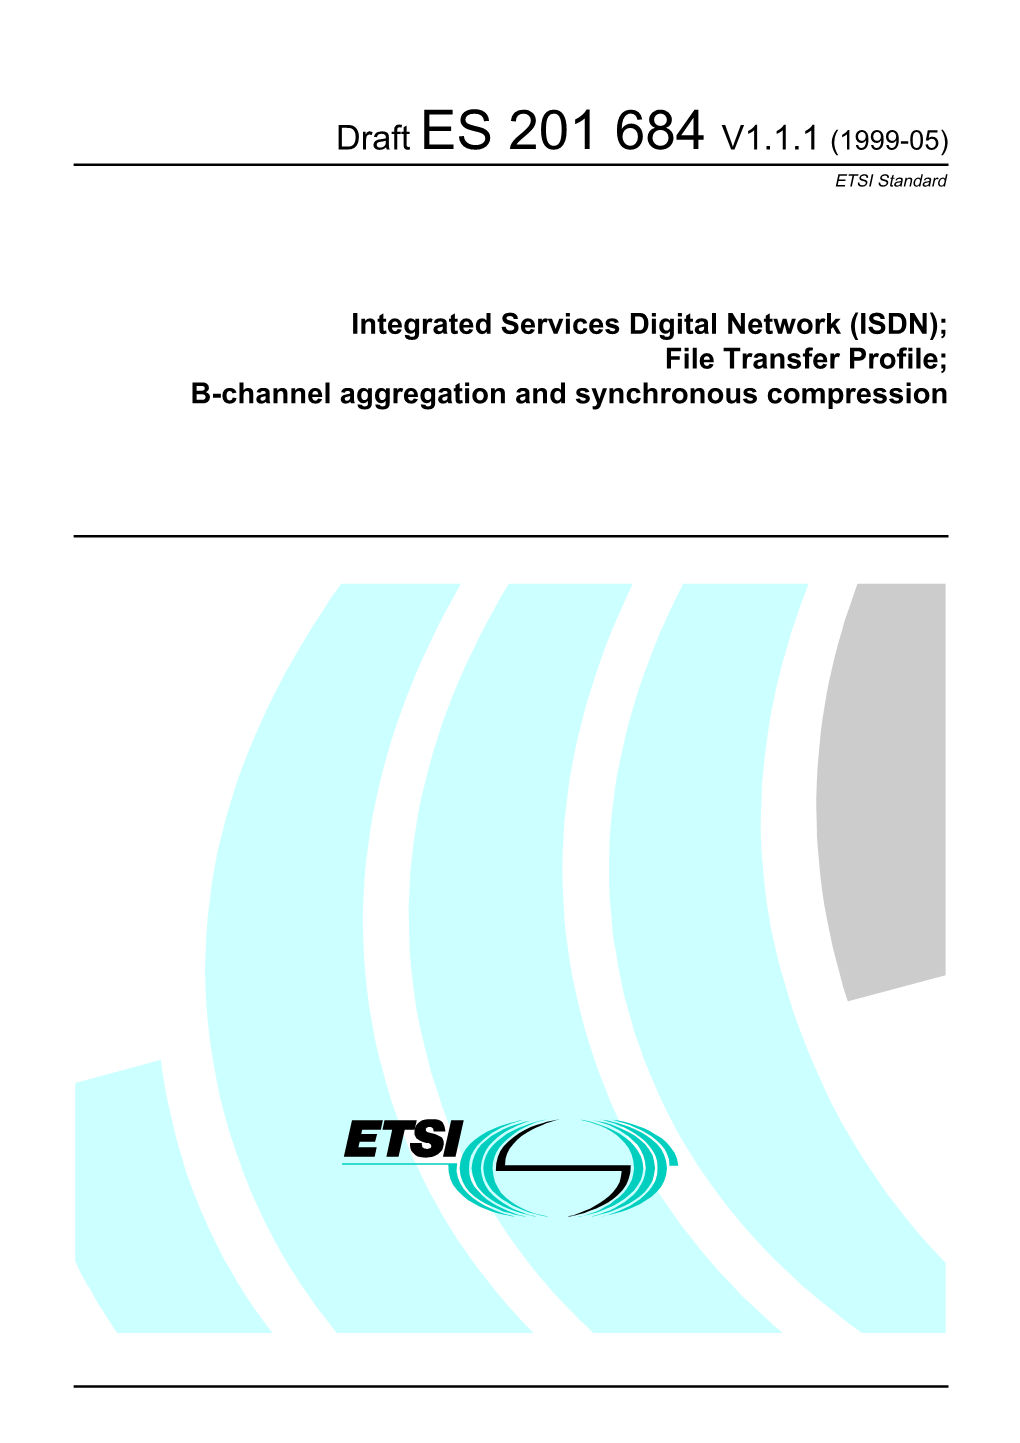 ES 201 684 V1.1.1 (1999-05) ETSI Standard